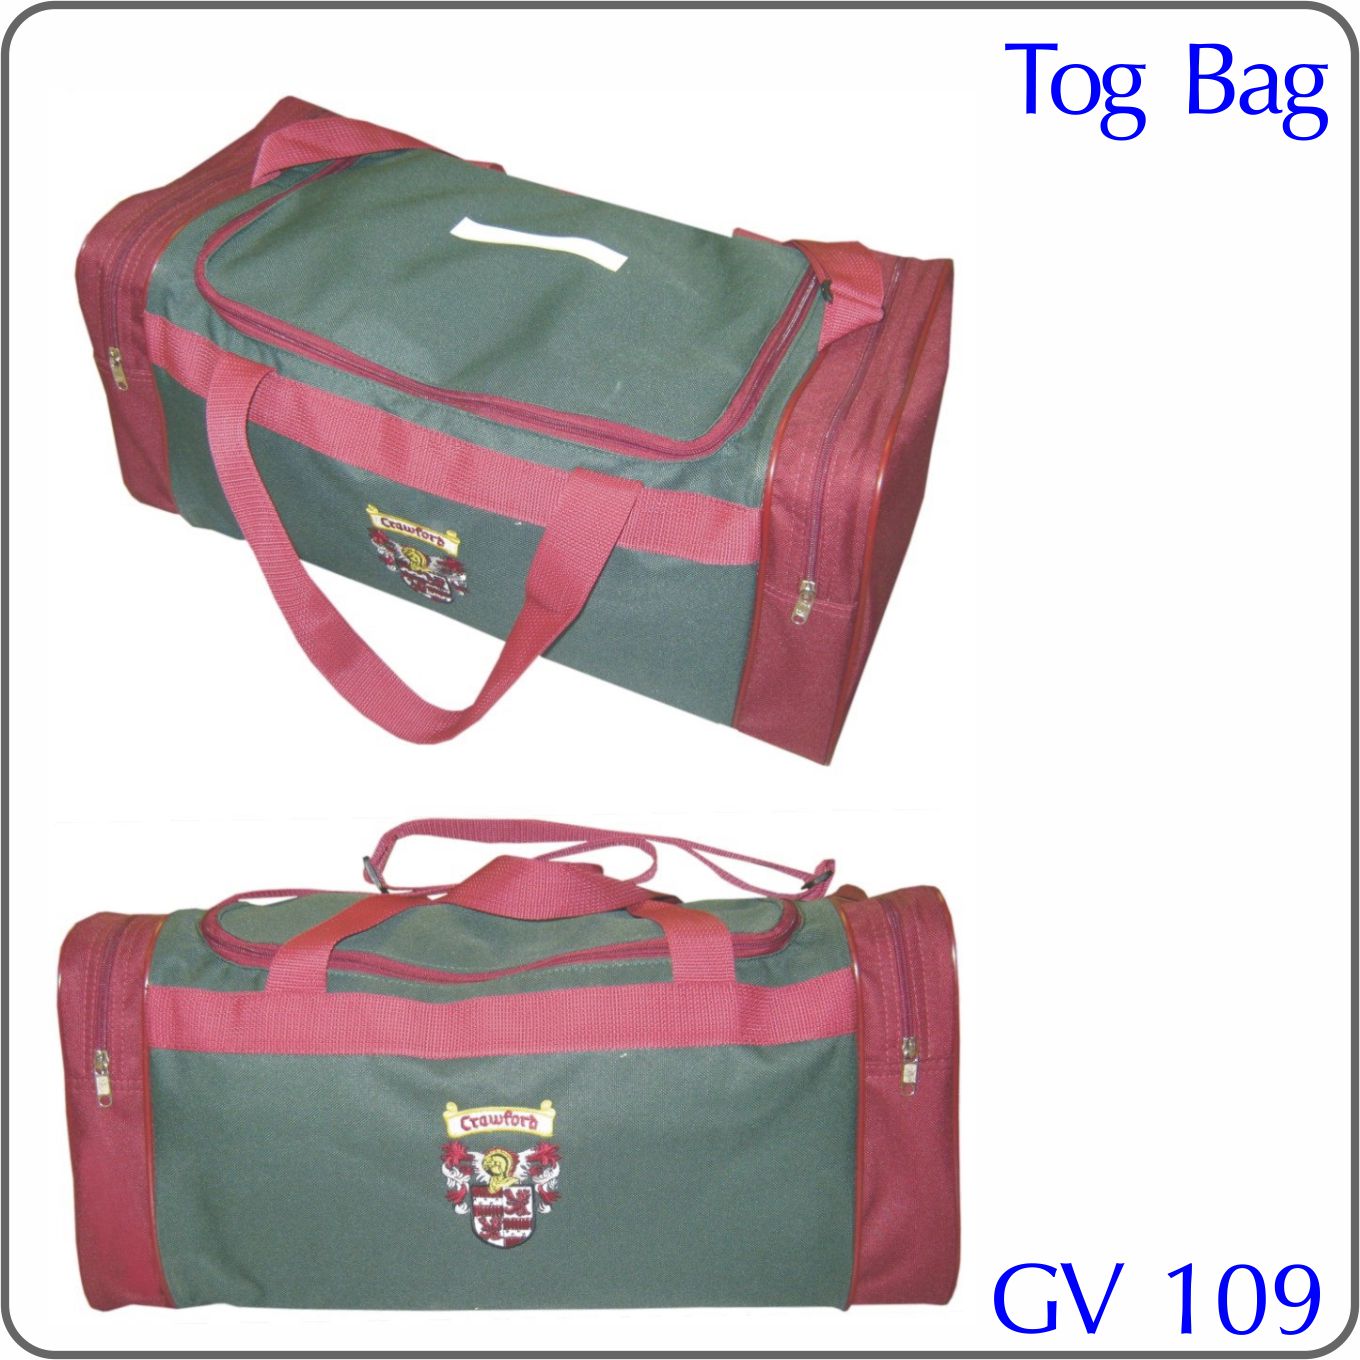 Medium tog bag - Global Bag and Sportswear Manufacturers, Est. 1994